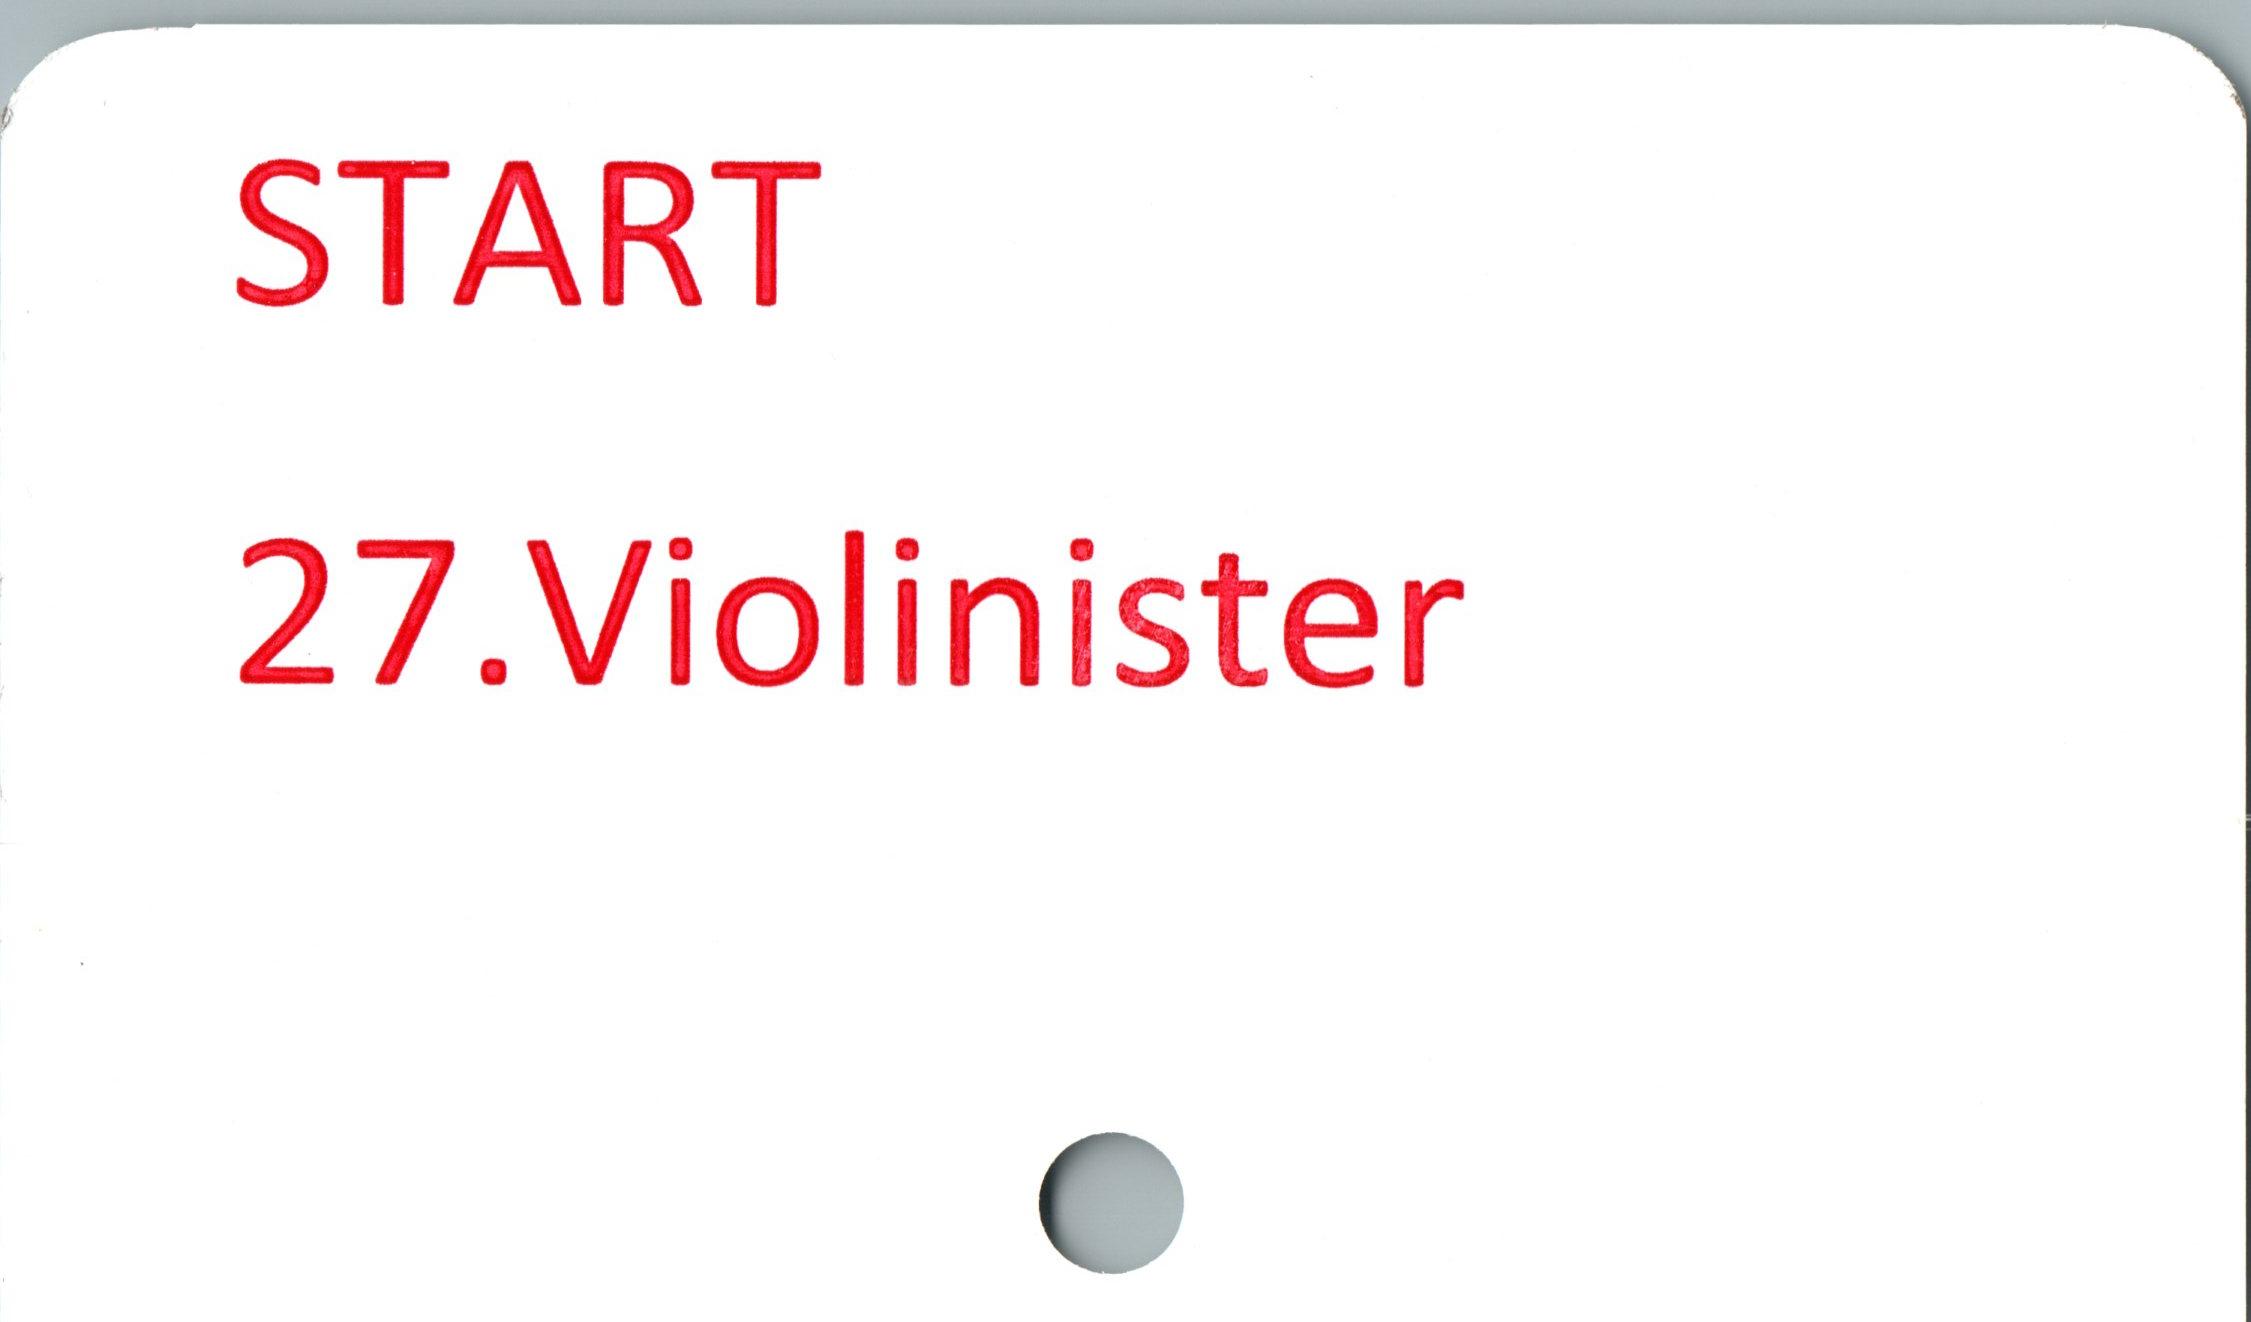  ﻿START
27.Violinister
